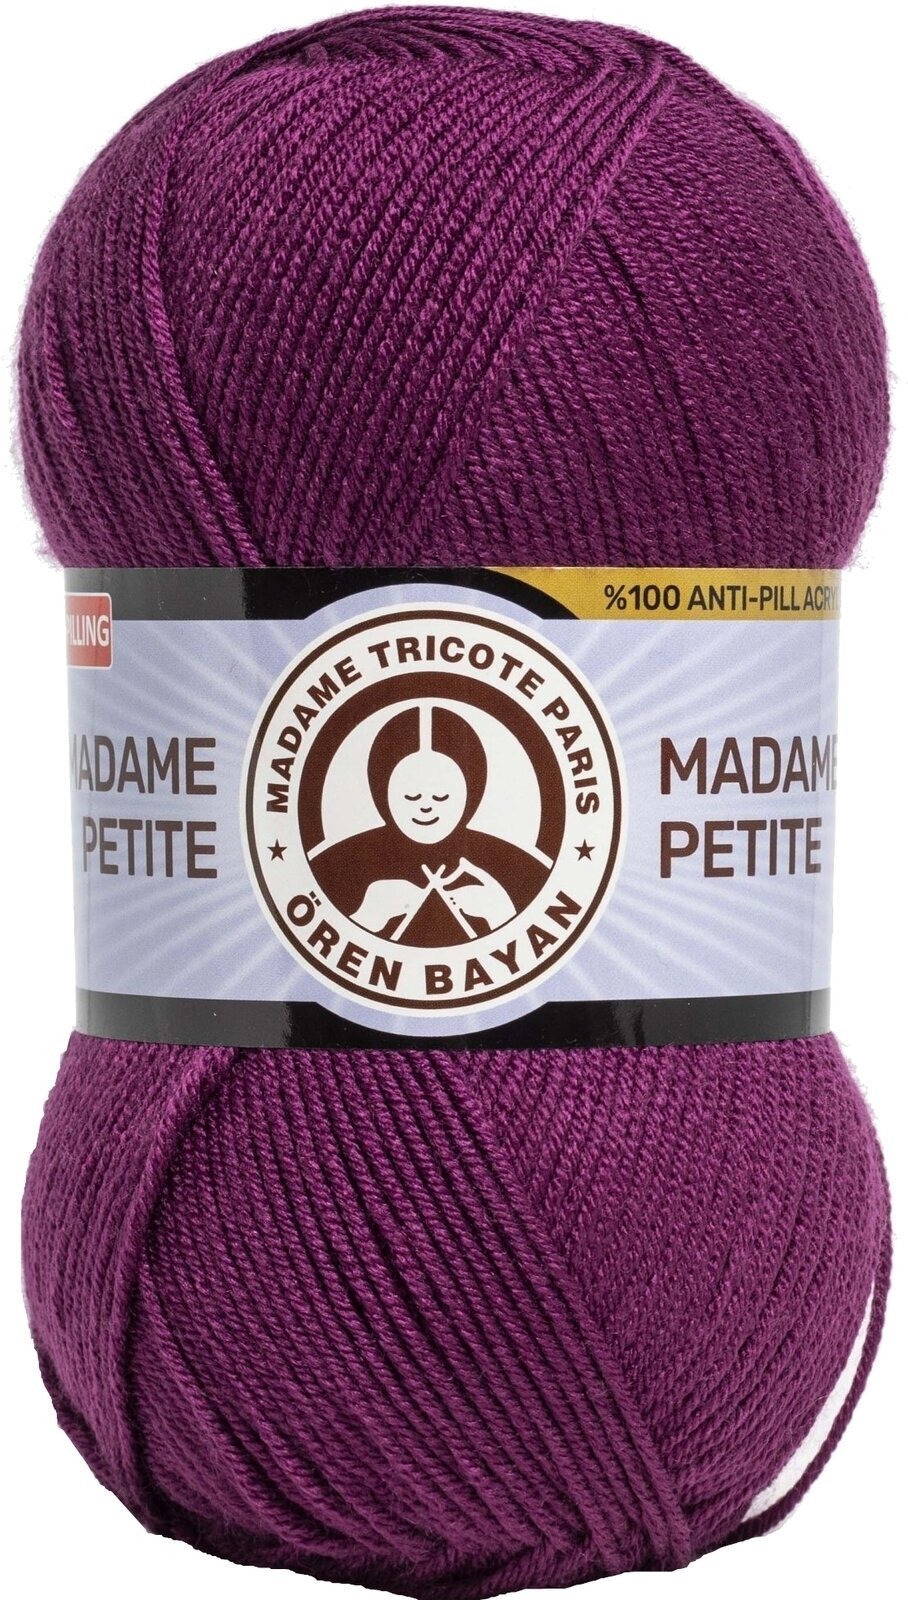 Knitting Yarn Madame Tricote Paris Madame Petite 3848 52 Knitting Yarn